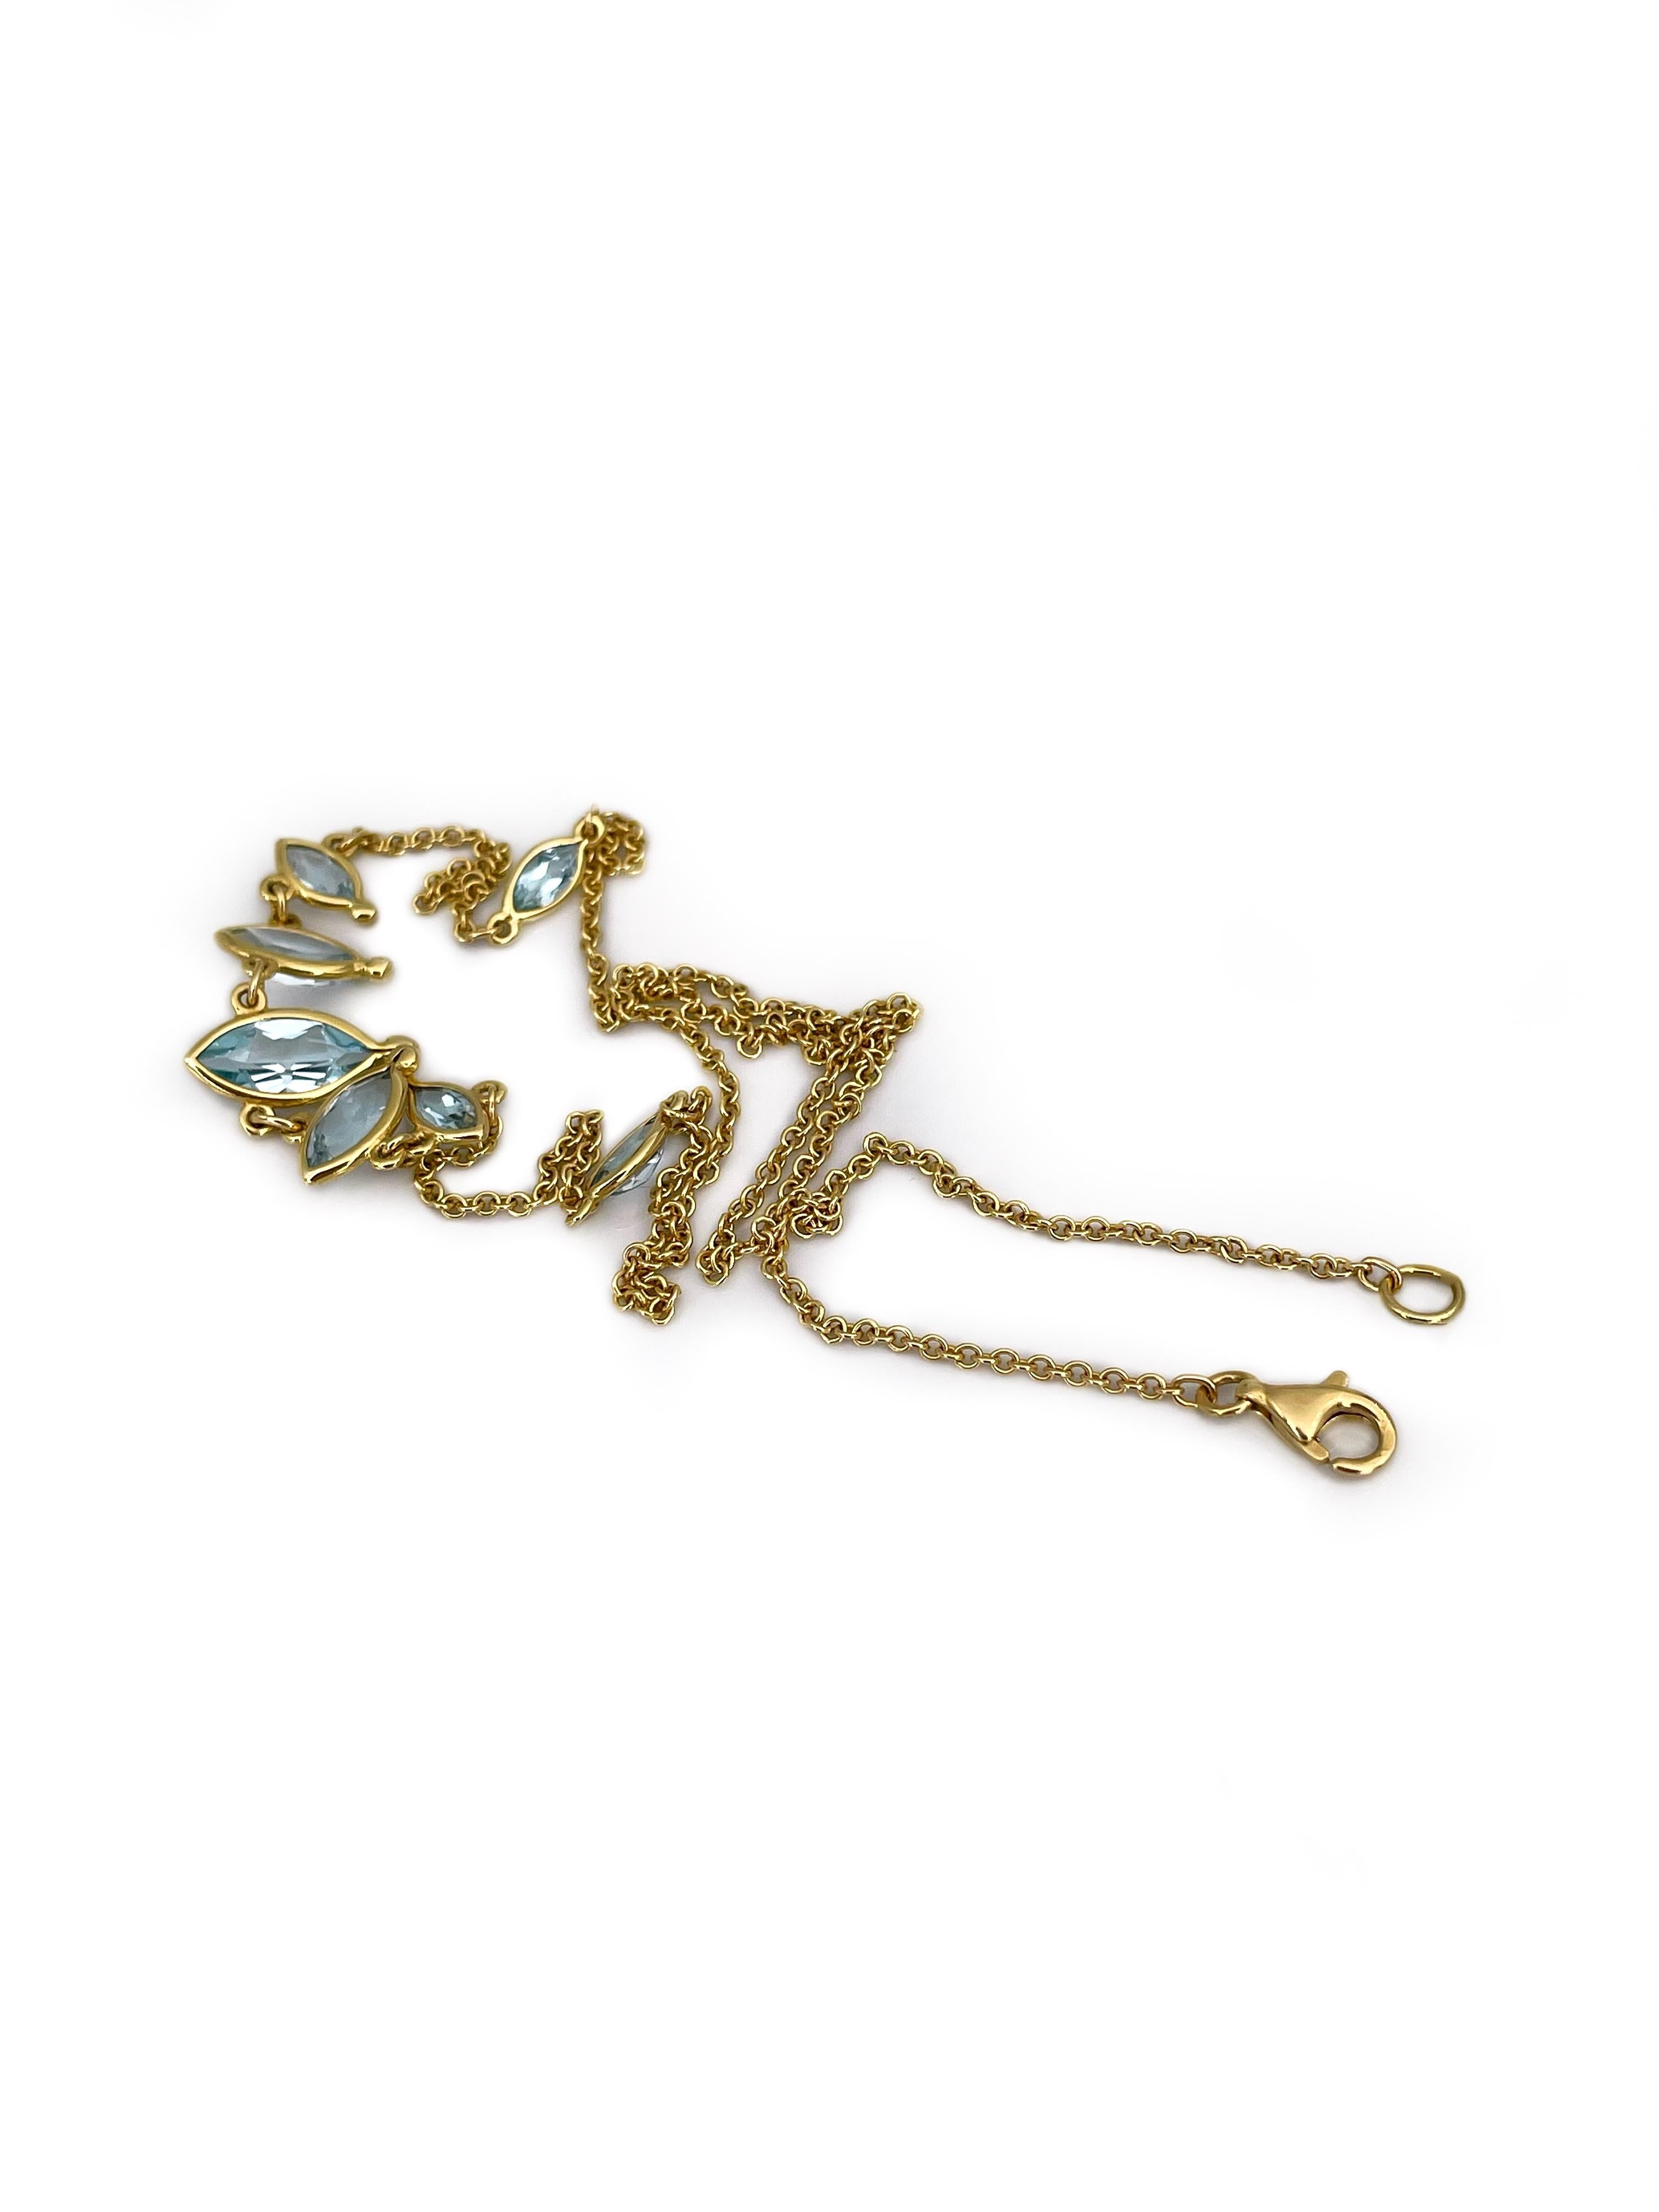 Women's Vintage 18 Karat Gold 3.76 Carat Topaz Collier Necklace